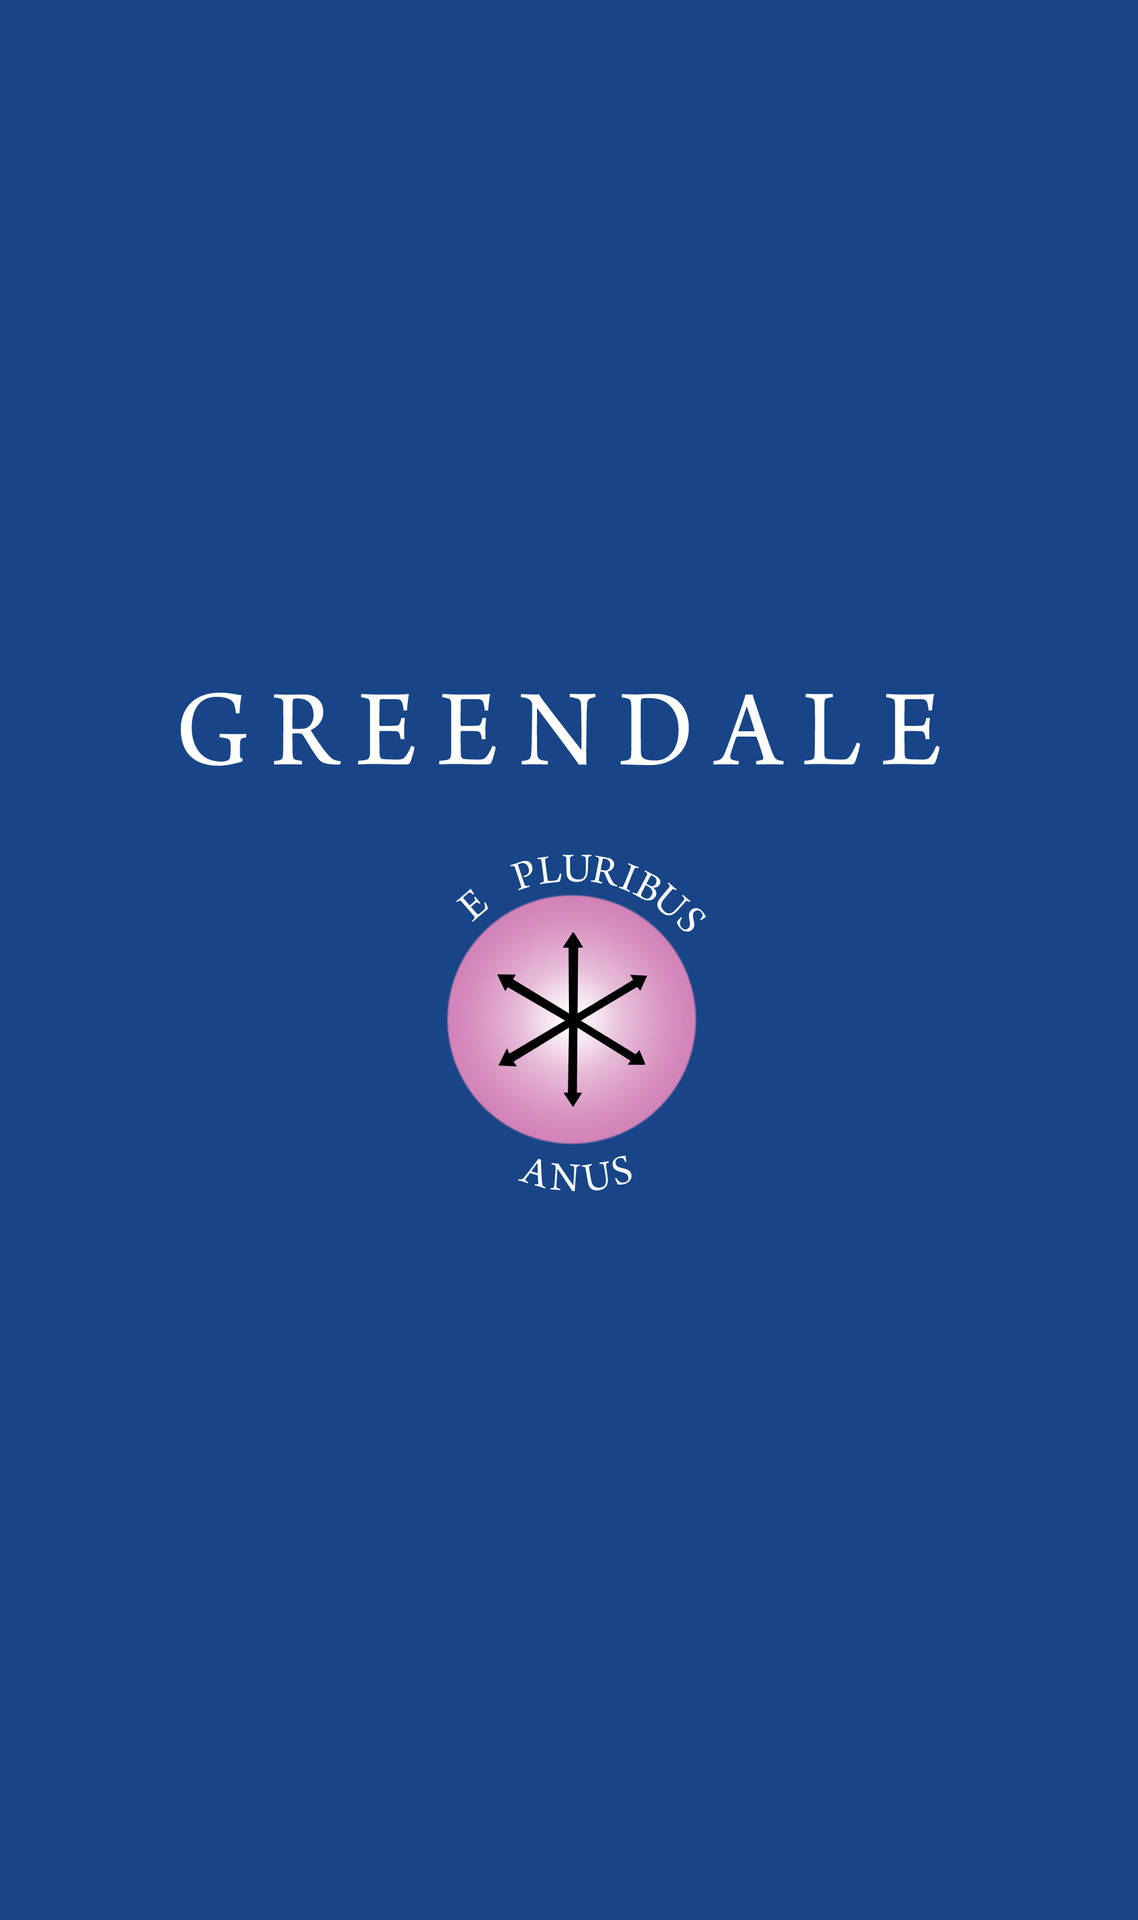 Community Greendale Slogan Background